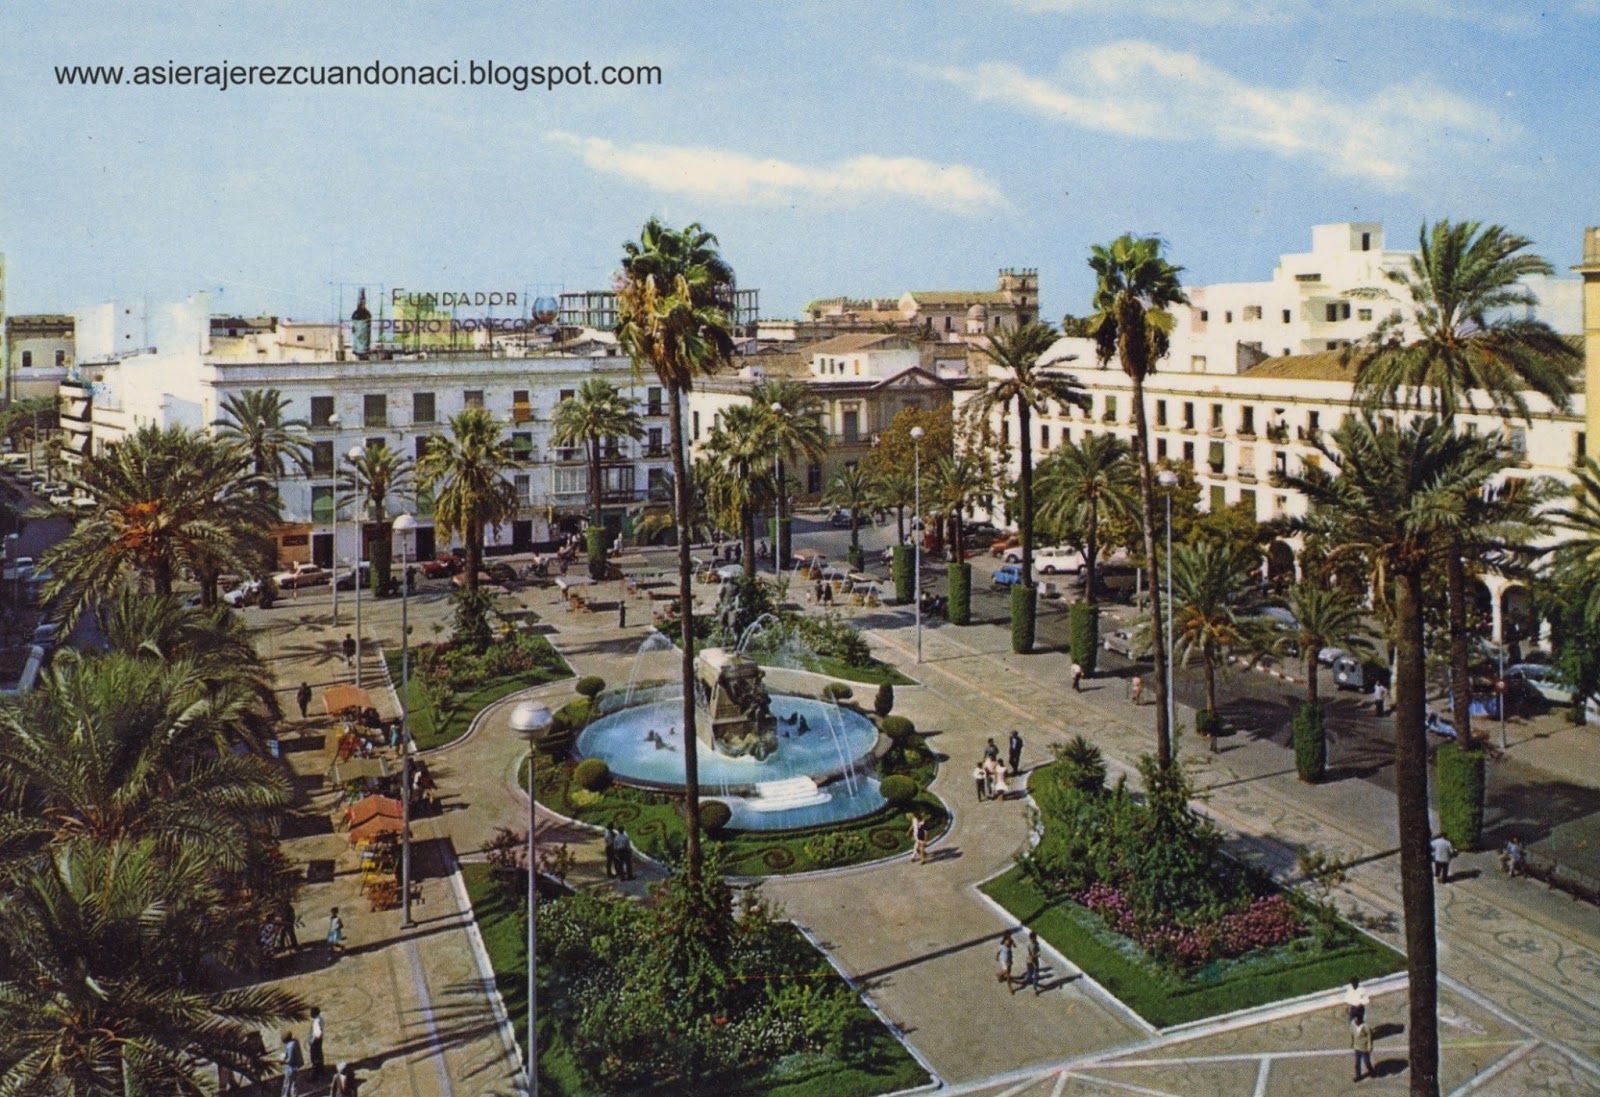 La antigua plaza del Arenal, en Jerez.